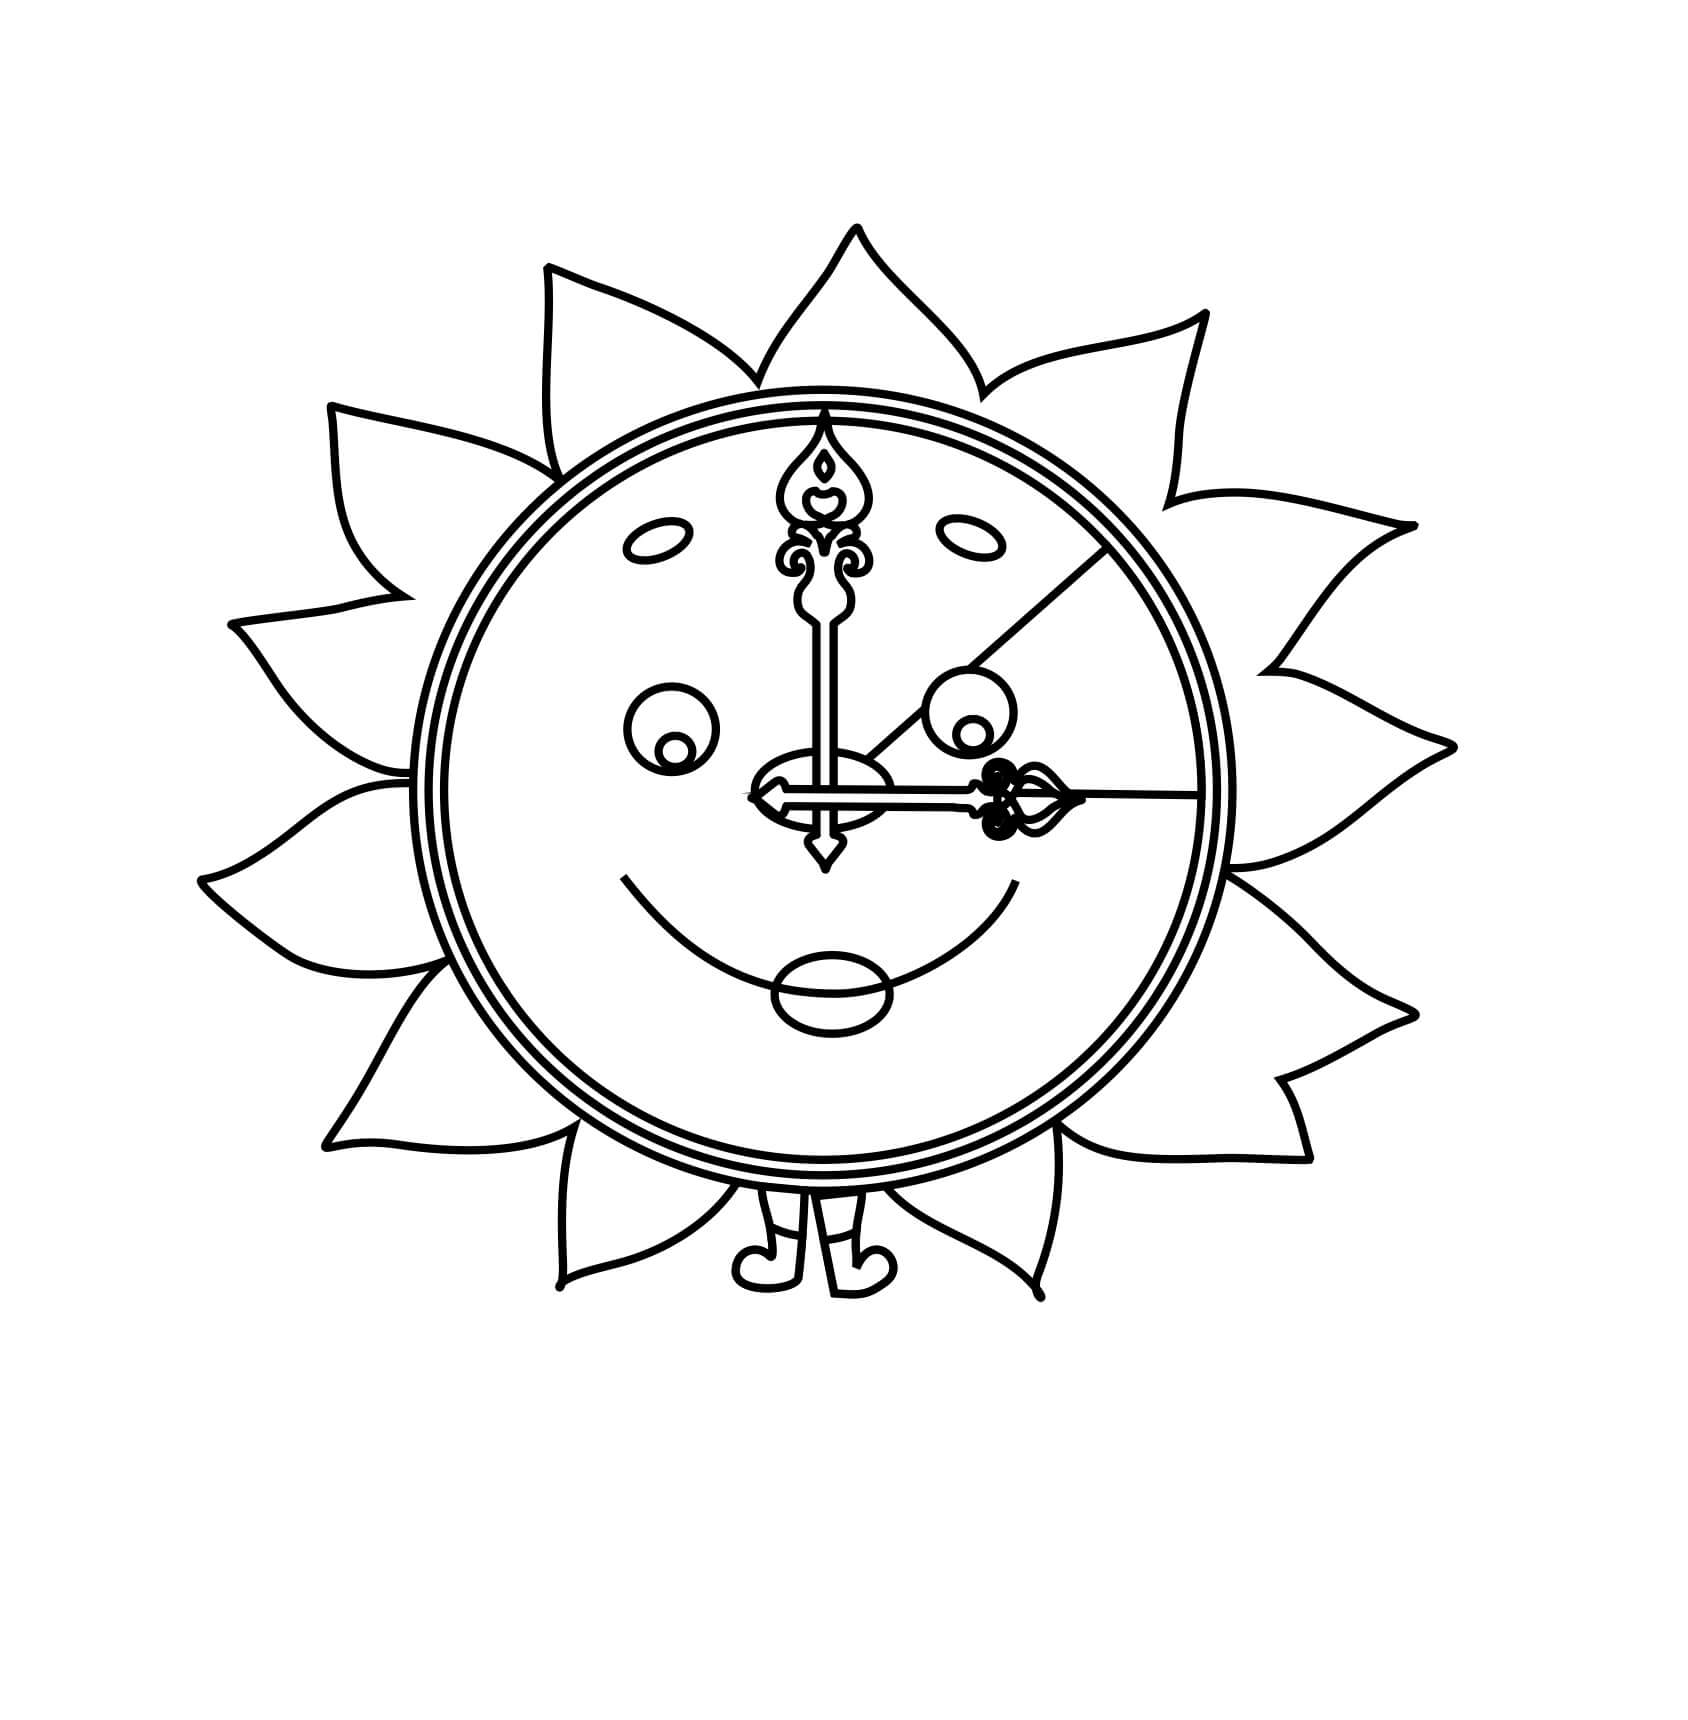 Horloge en Forme de Soleil coloring page